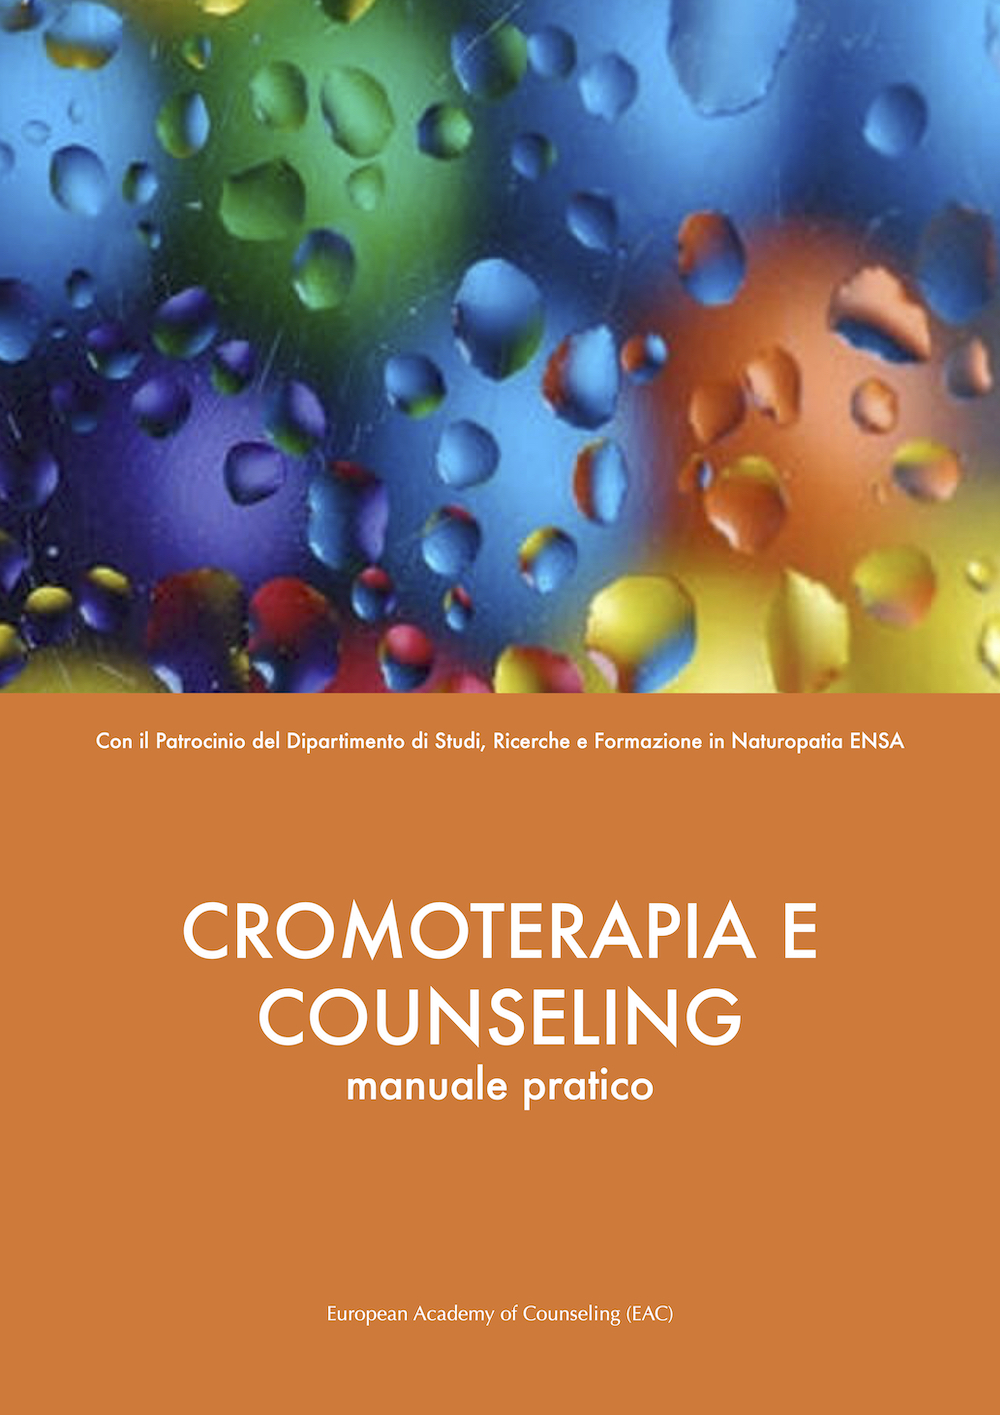 manuale di Cromoterapia e Counseling